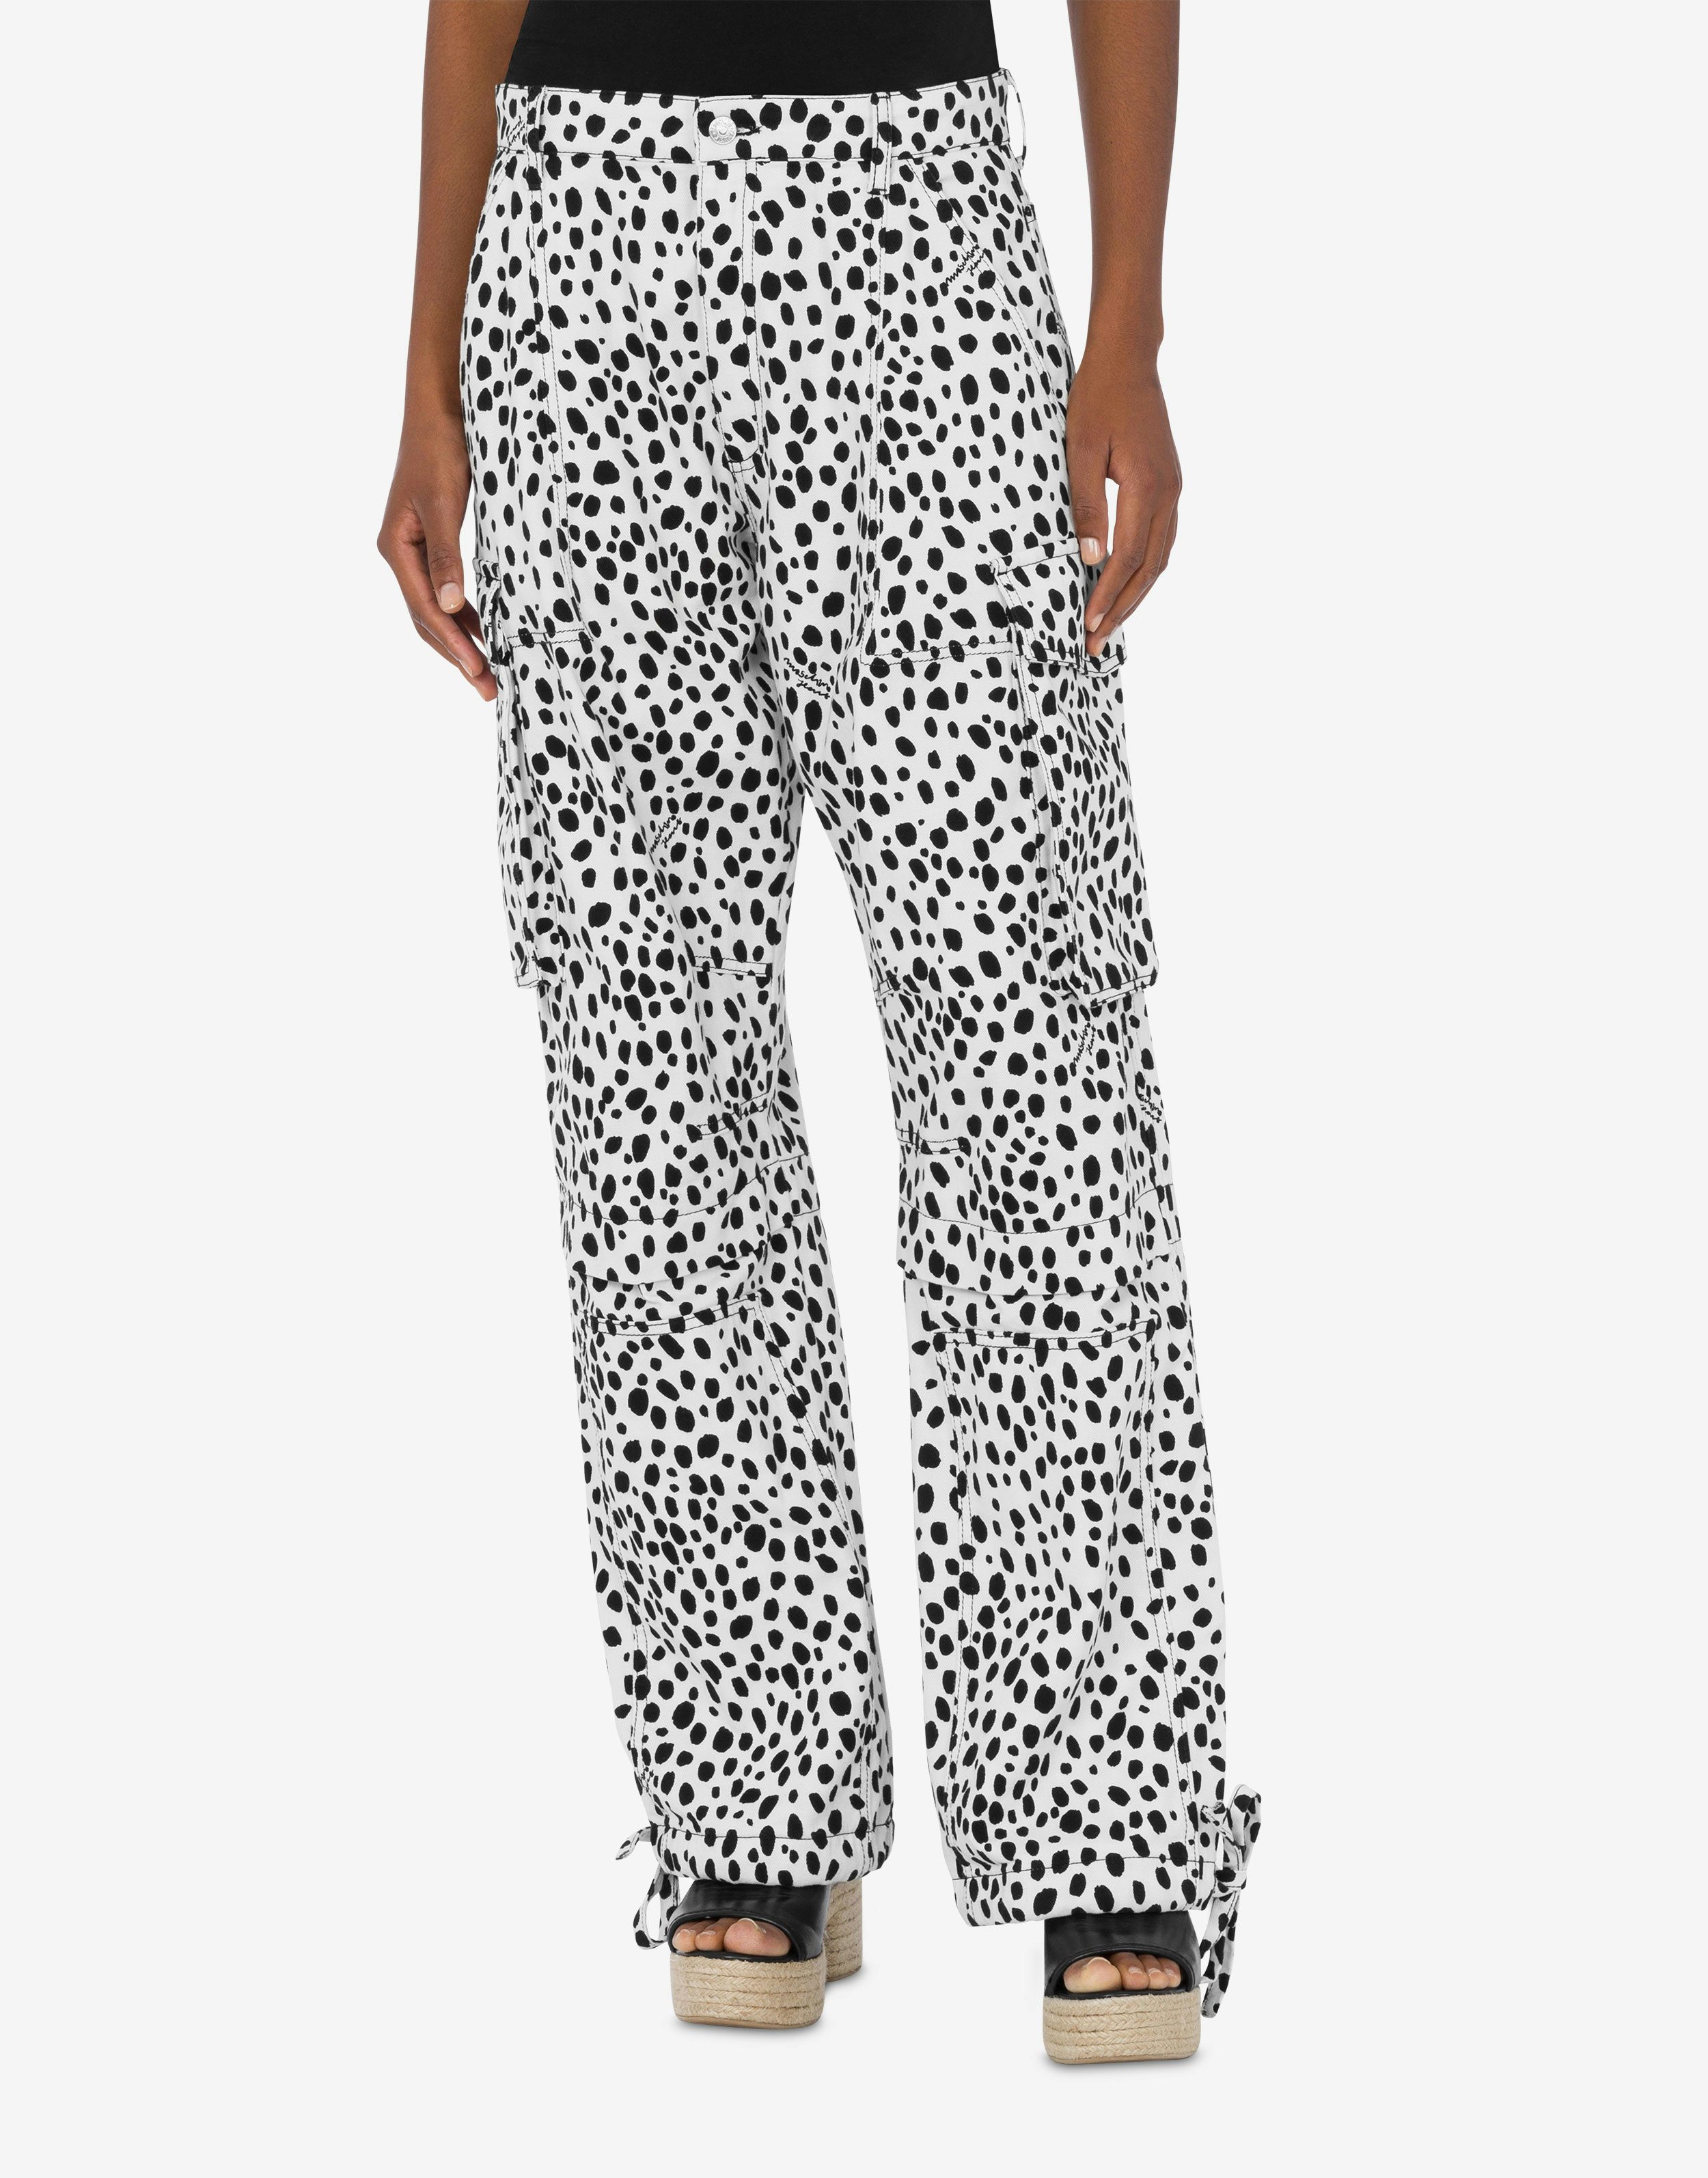 Leopard Print cotton drill trousers